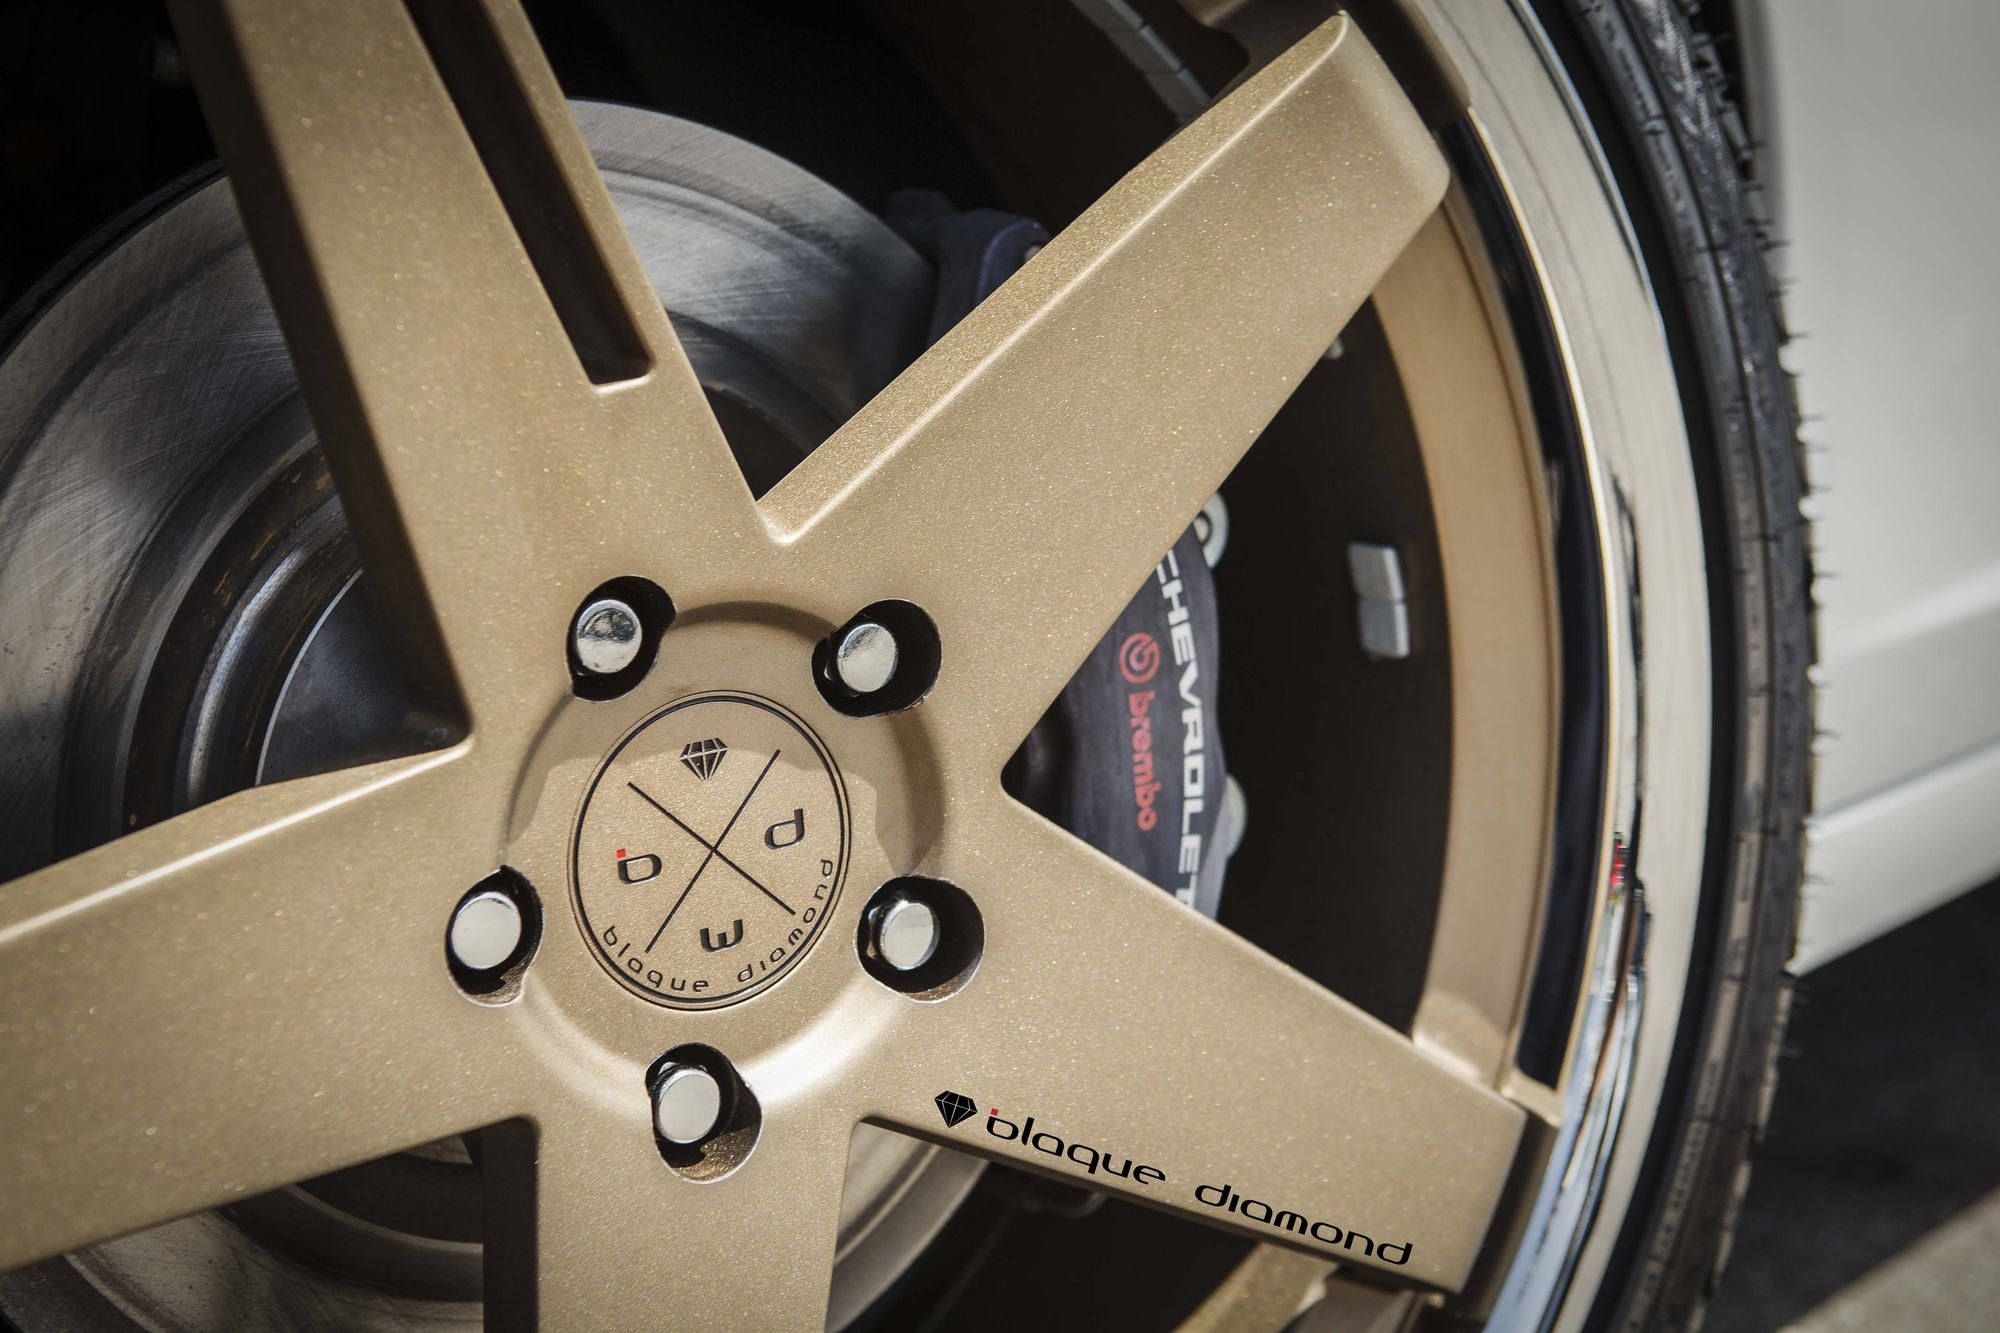 Bronze Blaque Diamond Wheels on White Chevy Camaro - Photo by Blaque Diamond